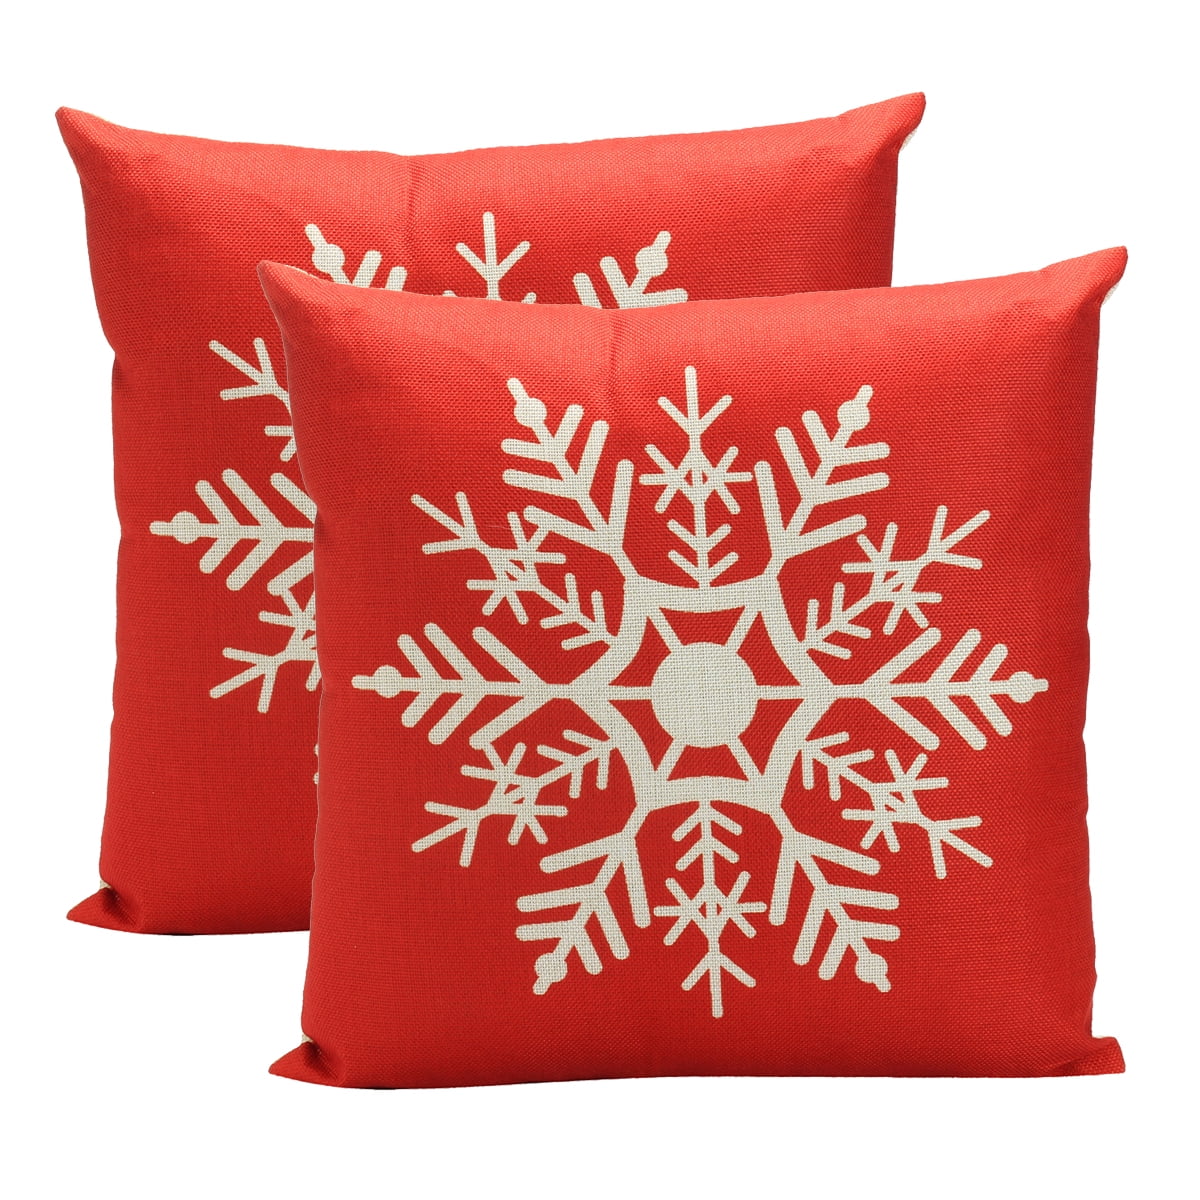 18" Merry Christmas Xmas Gold Pillow Case Waist Cushion Cover Case Home Decors